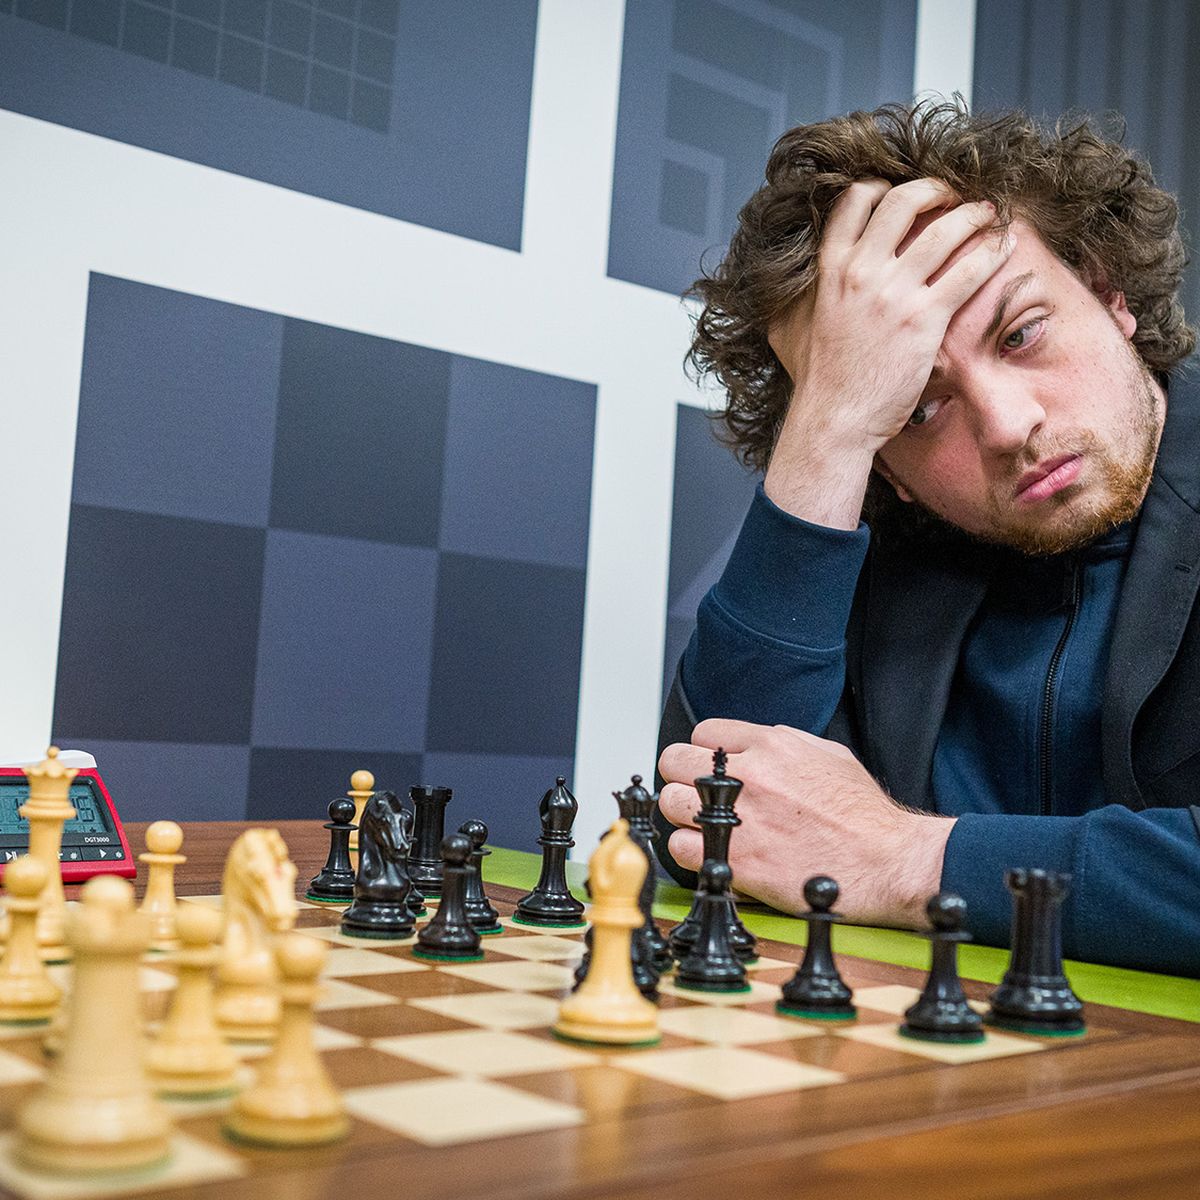 Hans Niemann: Teenage grandmaster 'likely cheated' in dozens of